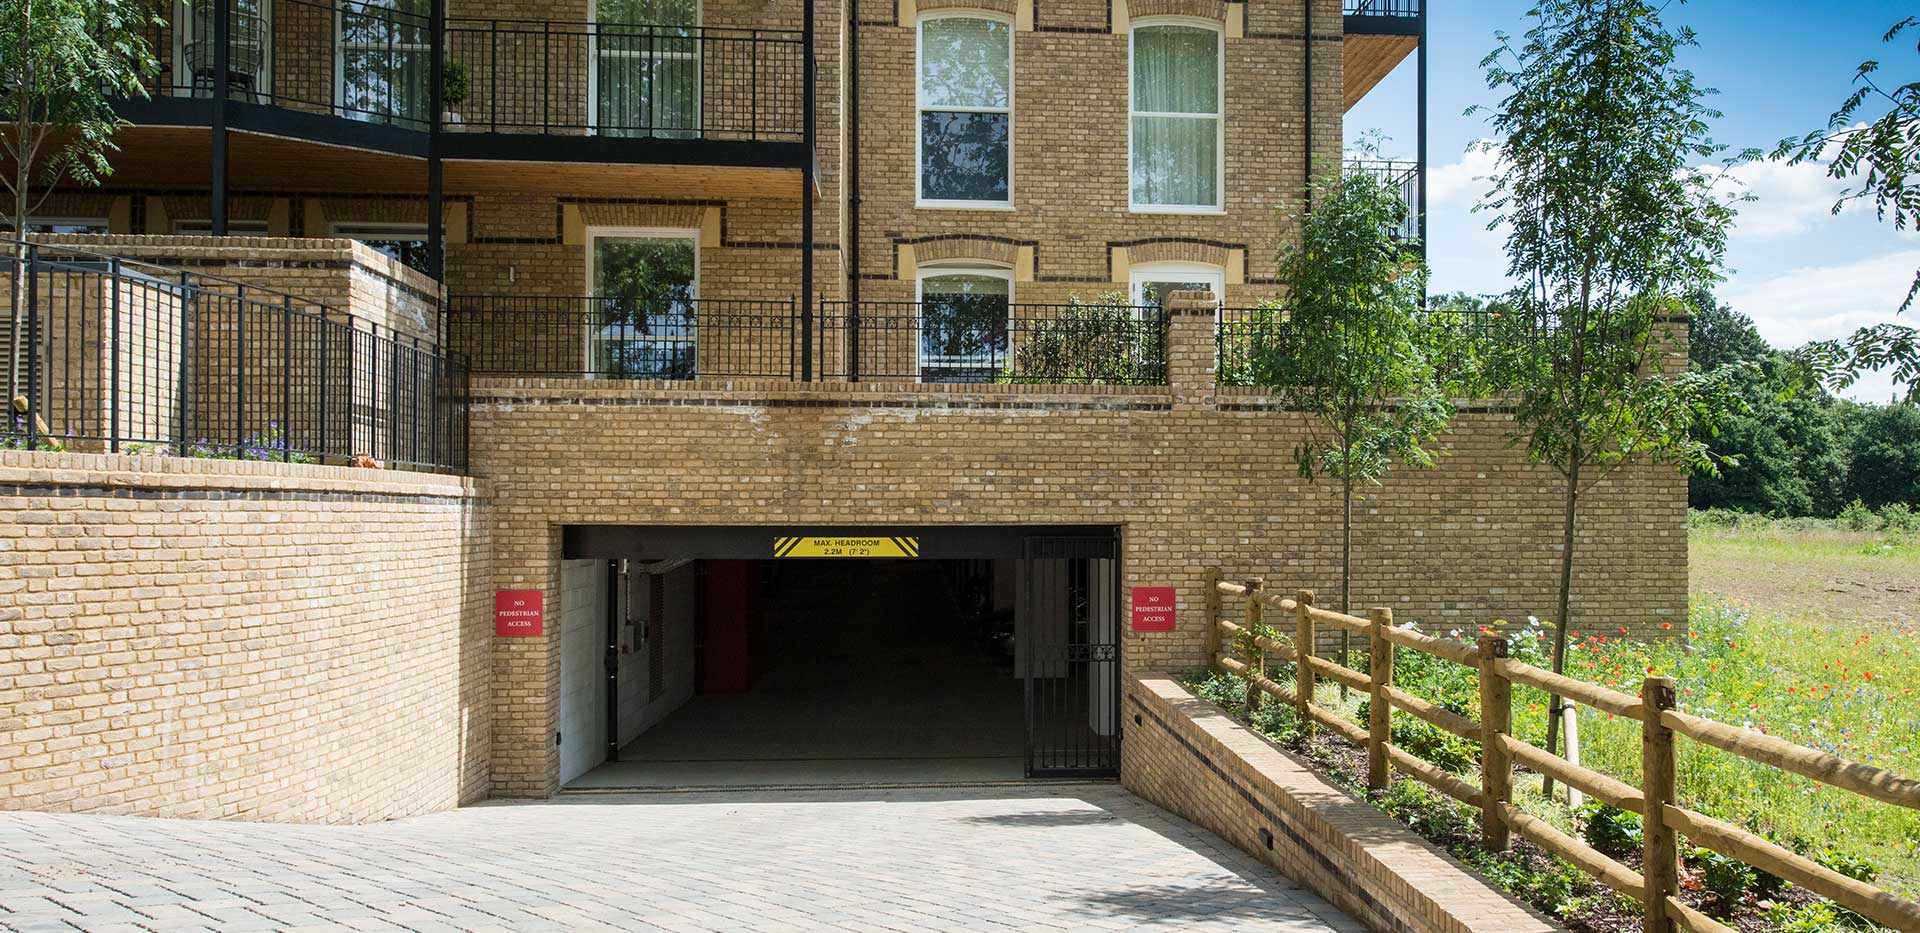 Underground Parking for Dukes Gardens & Wellington Row Residents